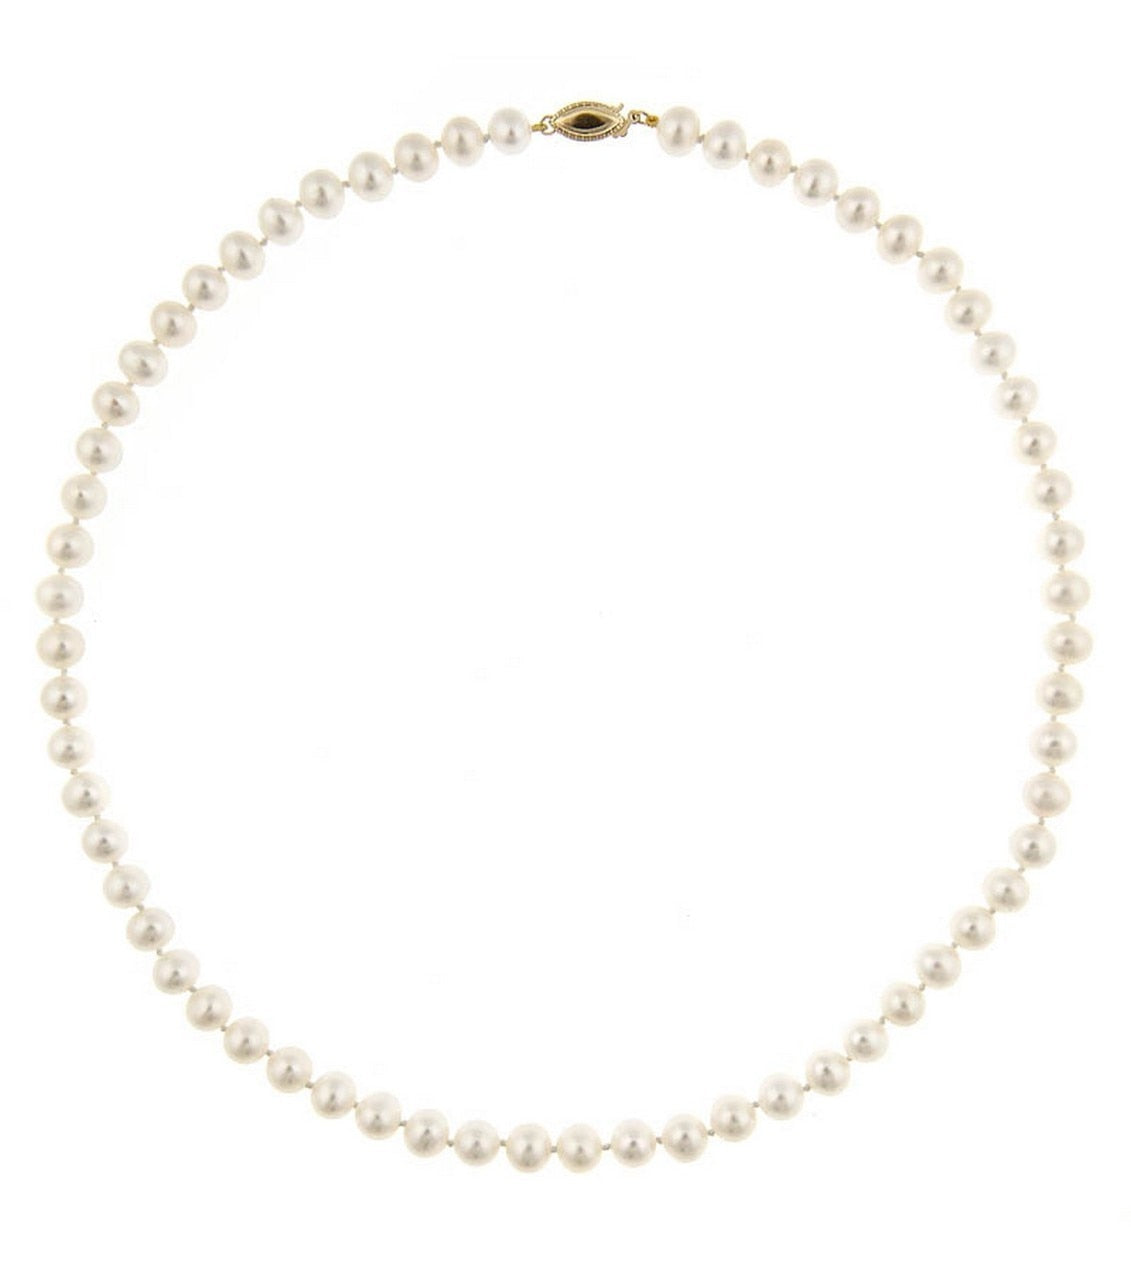 Strand of Fresh Water Pearls - Thomas Laine Jewelry